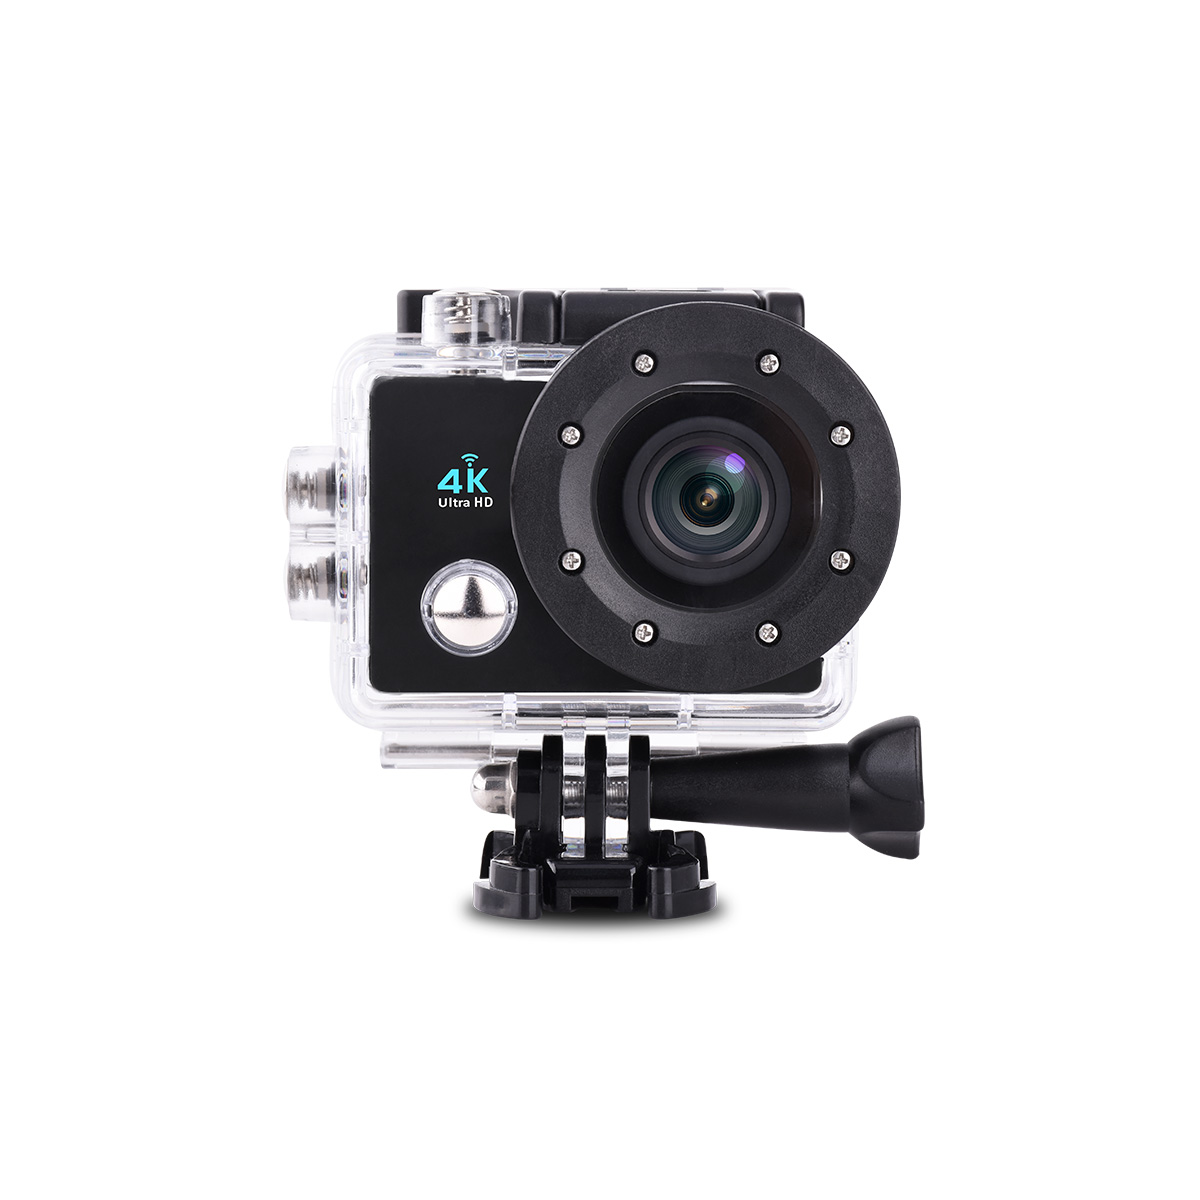 DV660 Kamera WLAN , Action PRIXTON